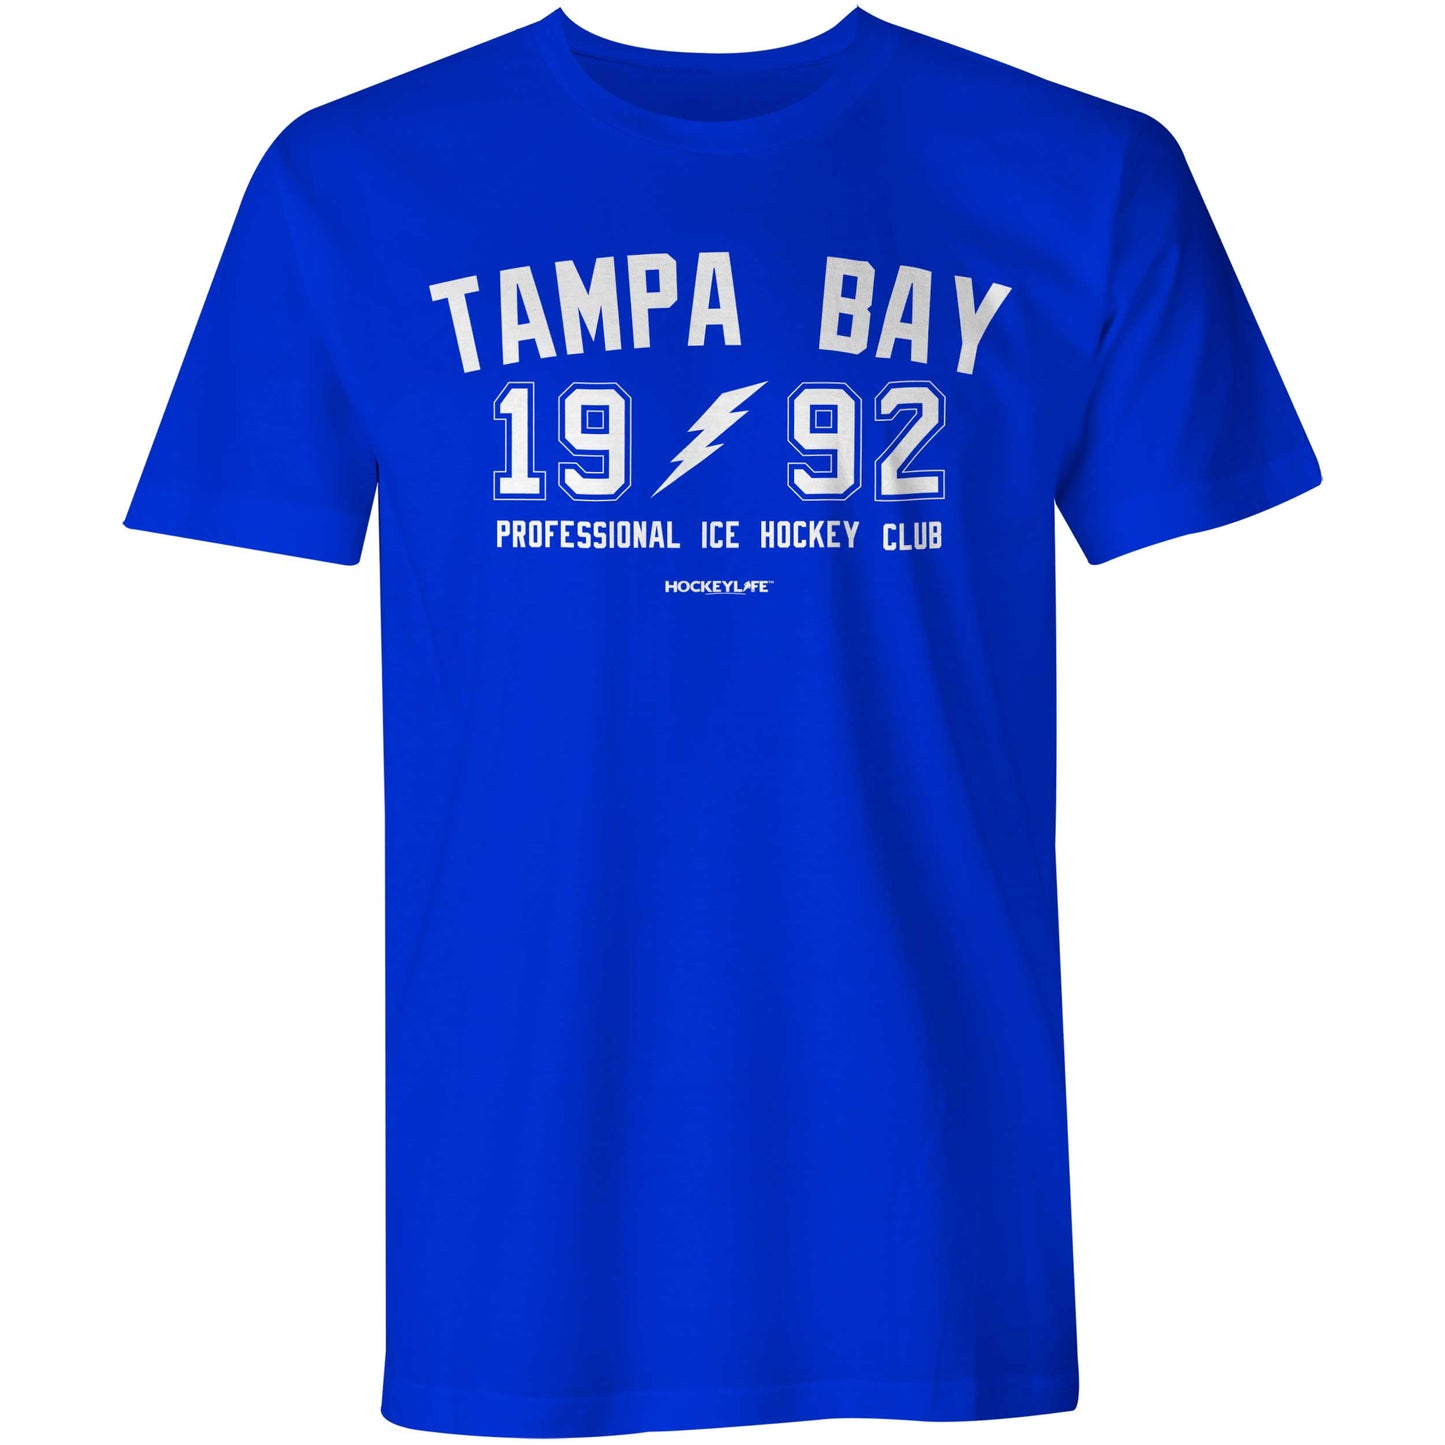 Tampa Bay Professional Hockey Club Tee Shirt (Royal Blue)